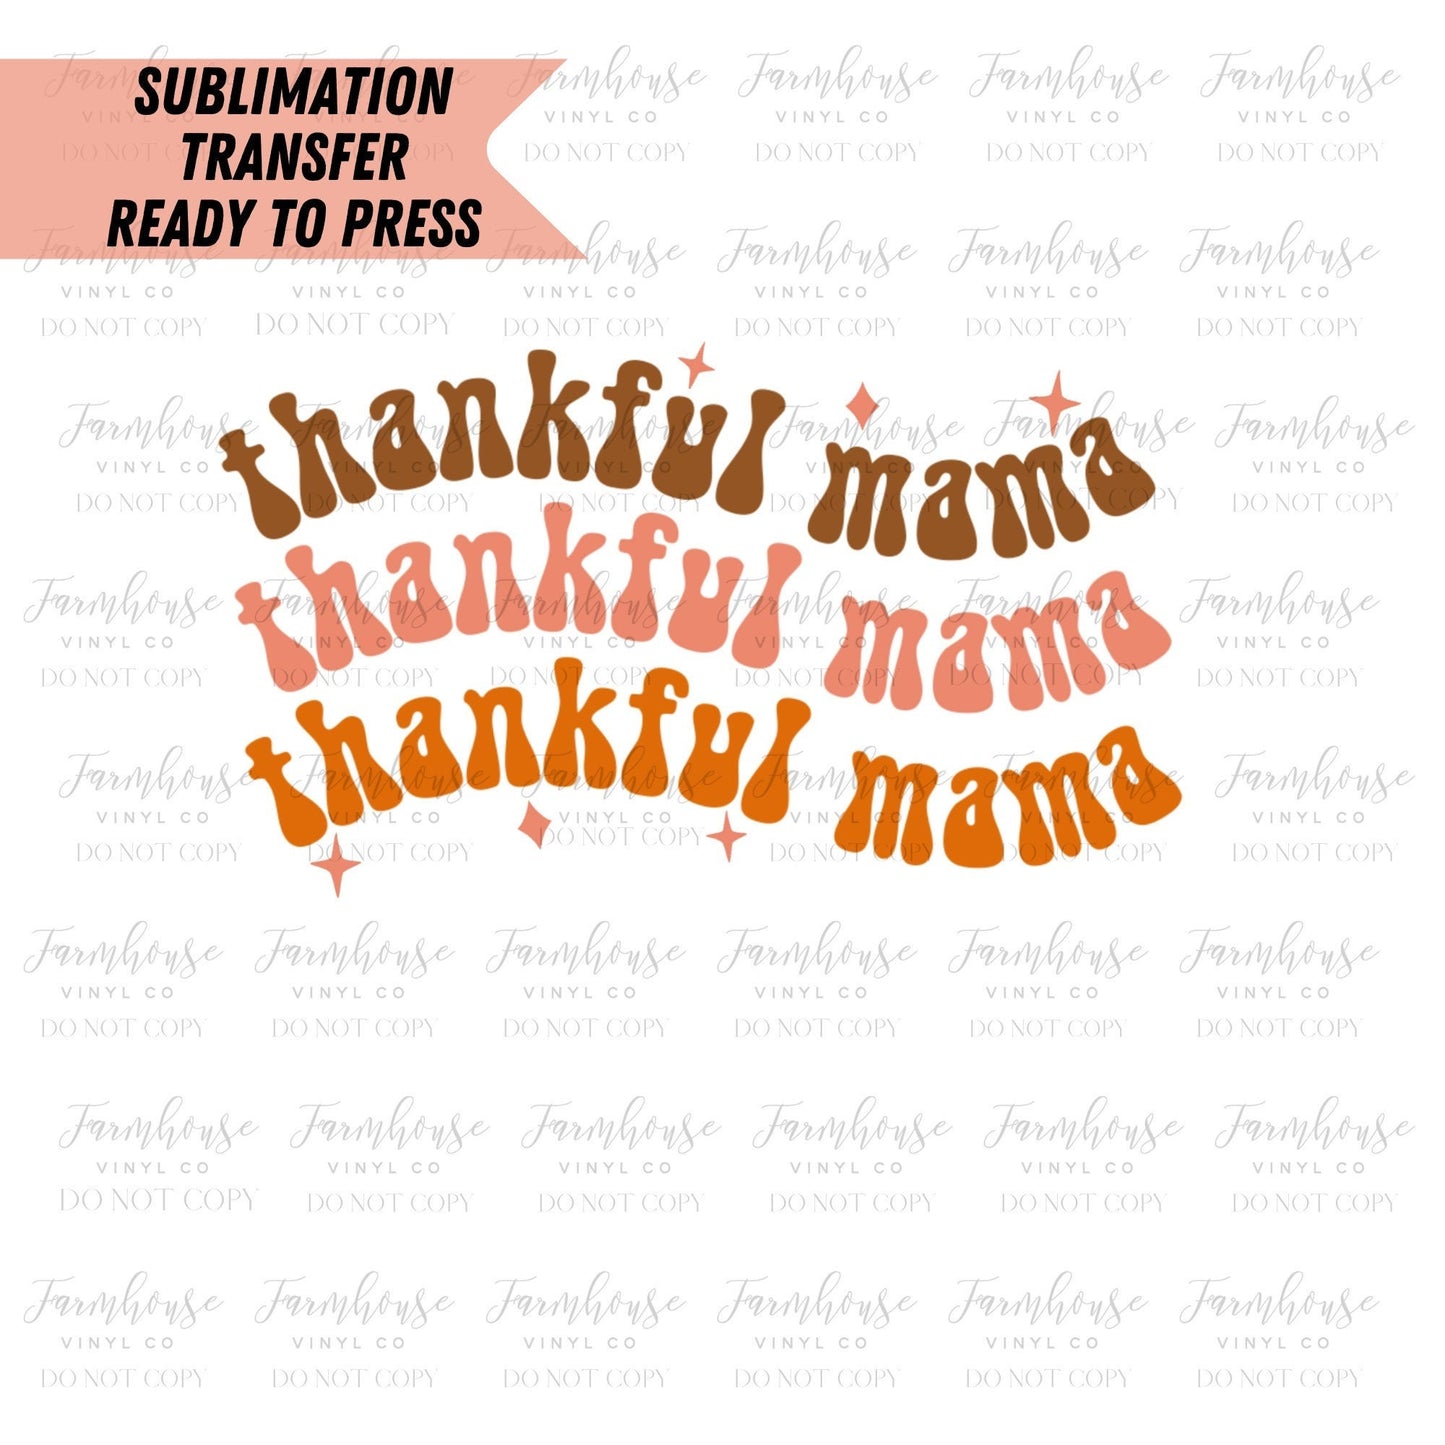 Thankful Mama Wavy Font Fall Sublimation Design, Retro Thanksgiving Designs, Ready To Press, Sublimation, Transfer Ready Press, Teal Pumpkin - Farmhouse Vinyl Co